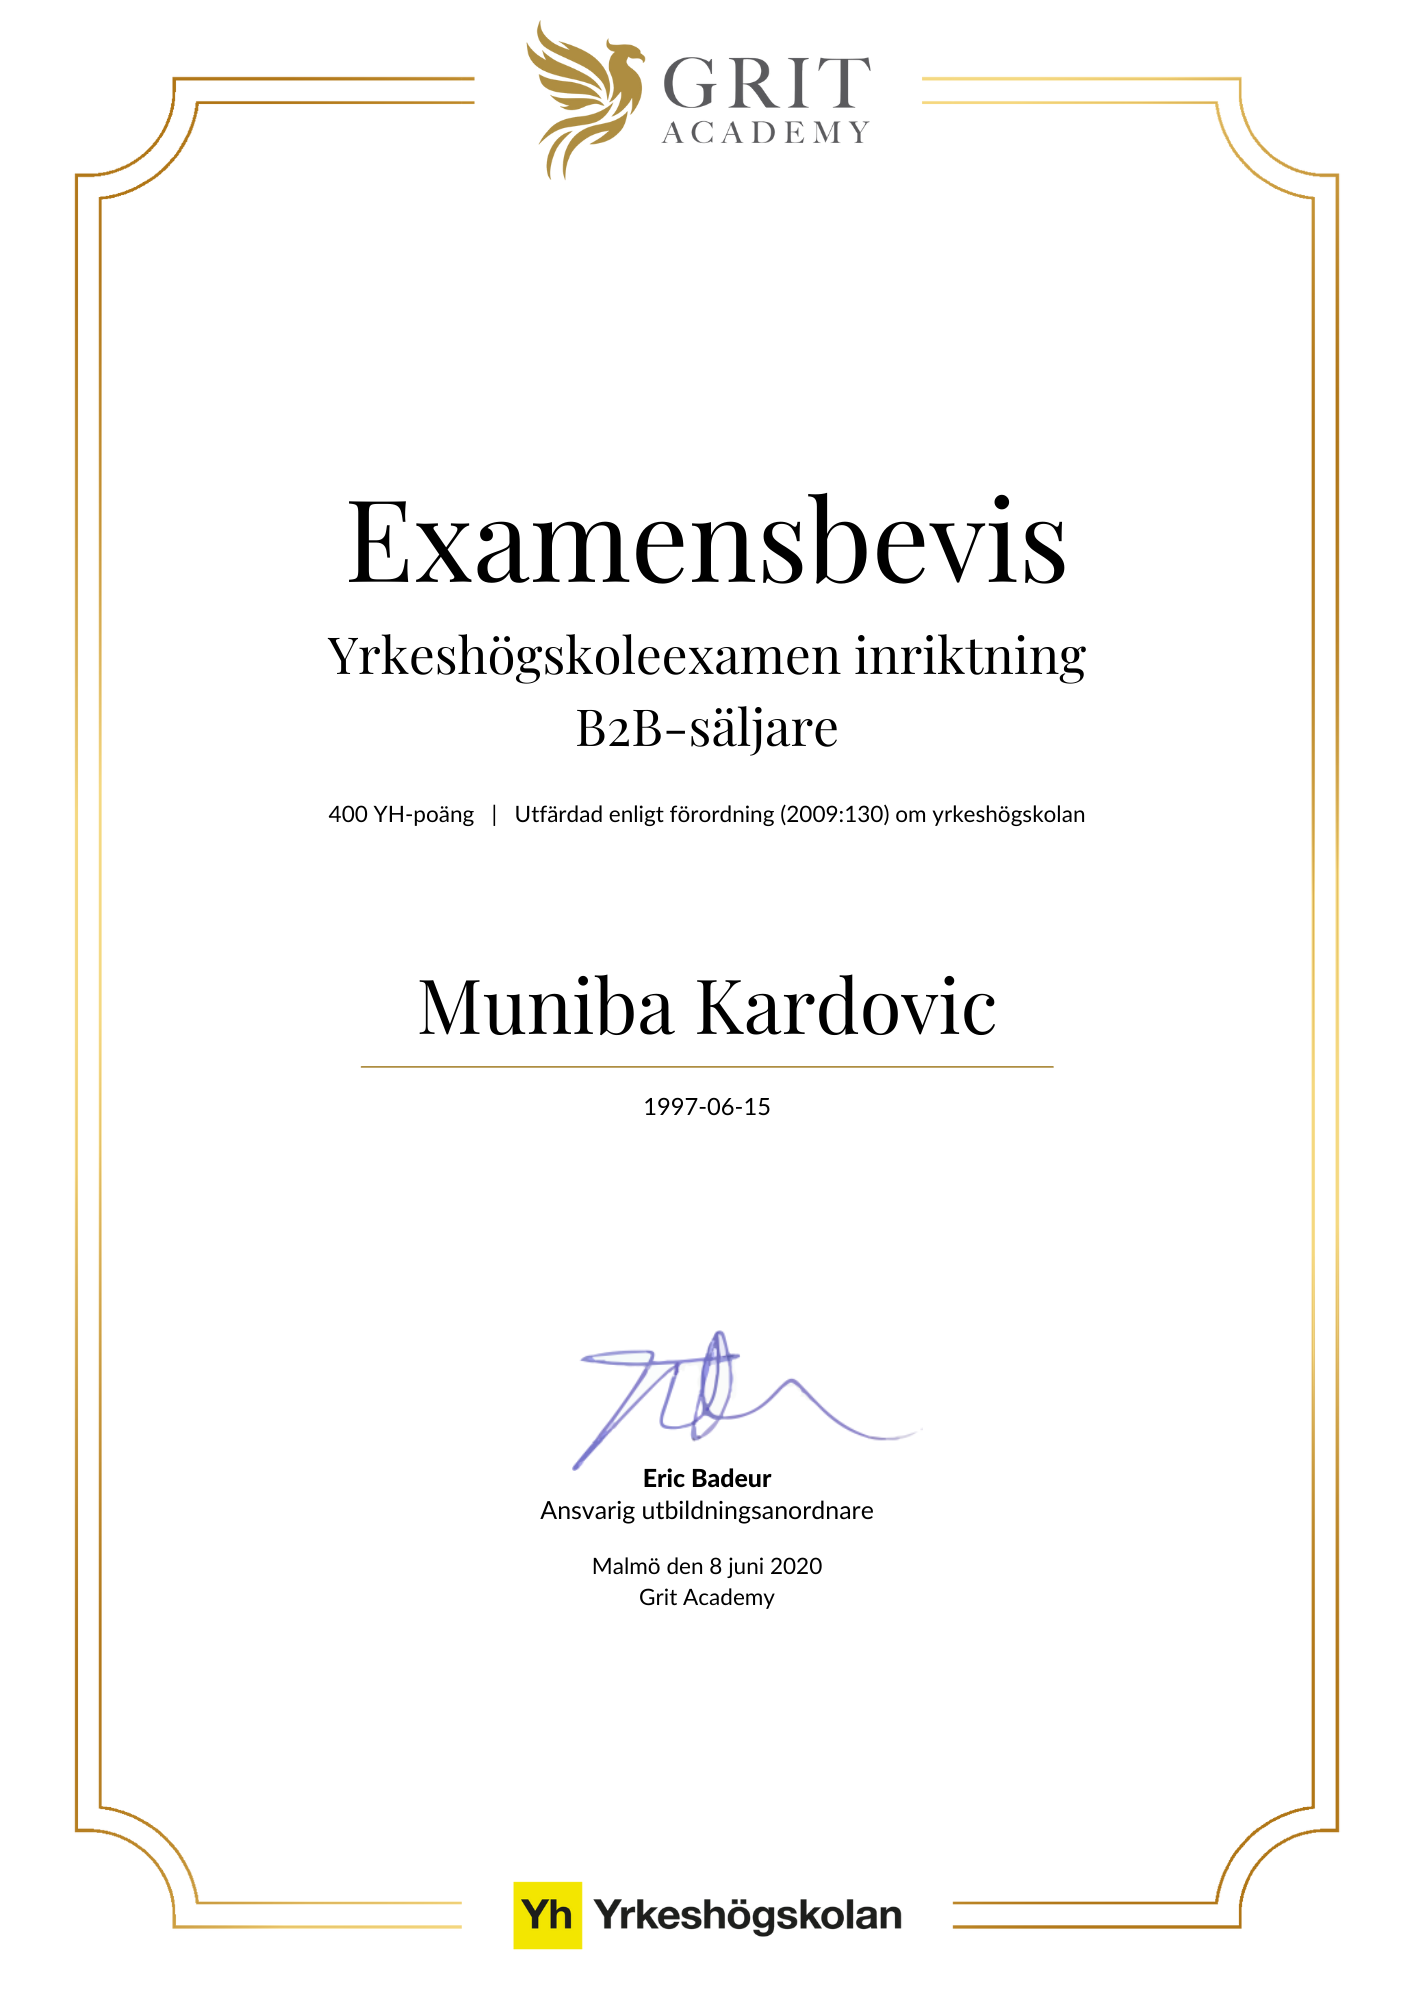 Examensbevis Muniba Kardovic - 1